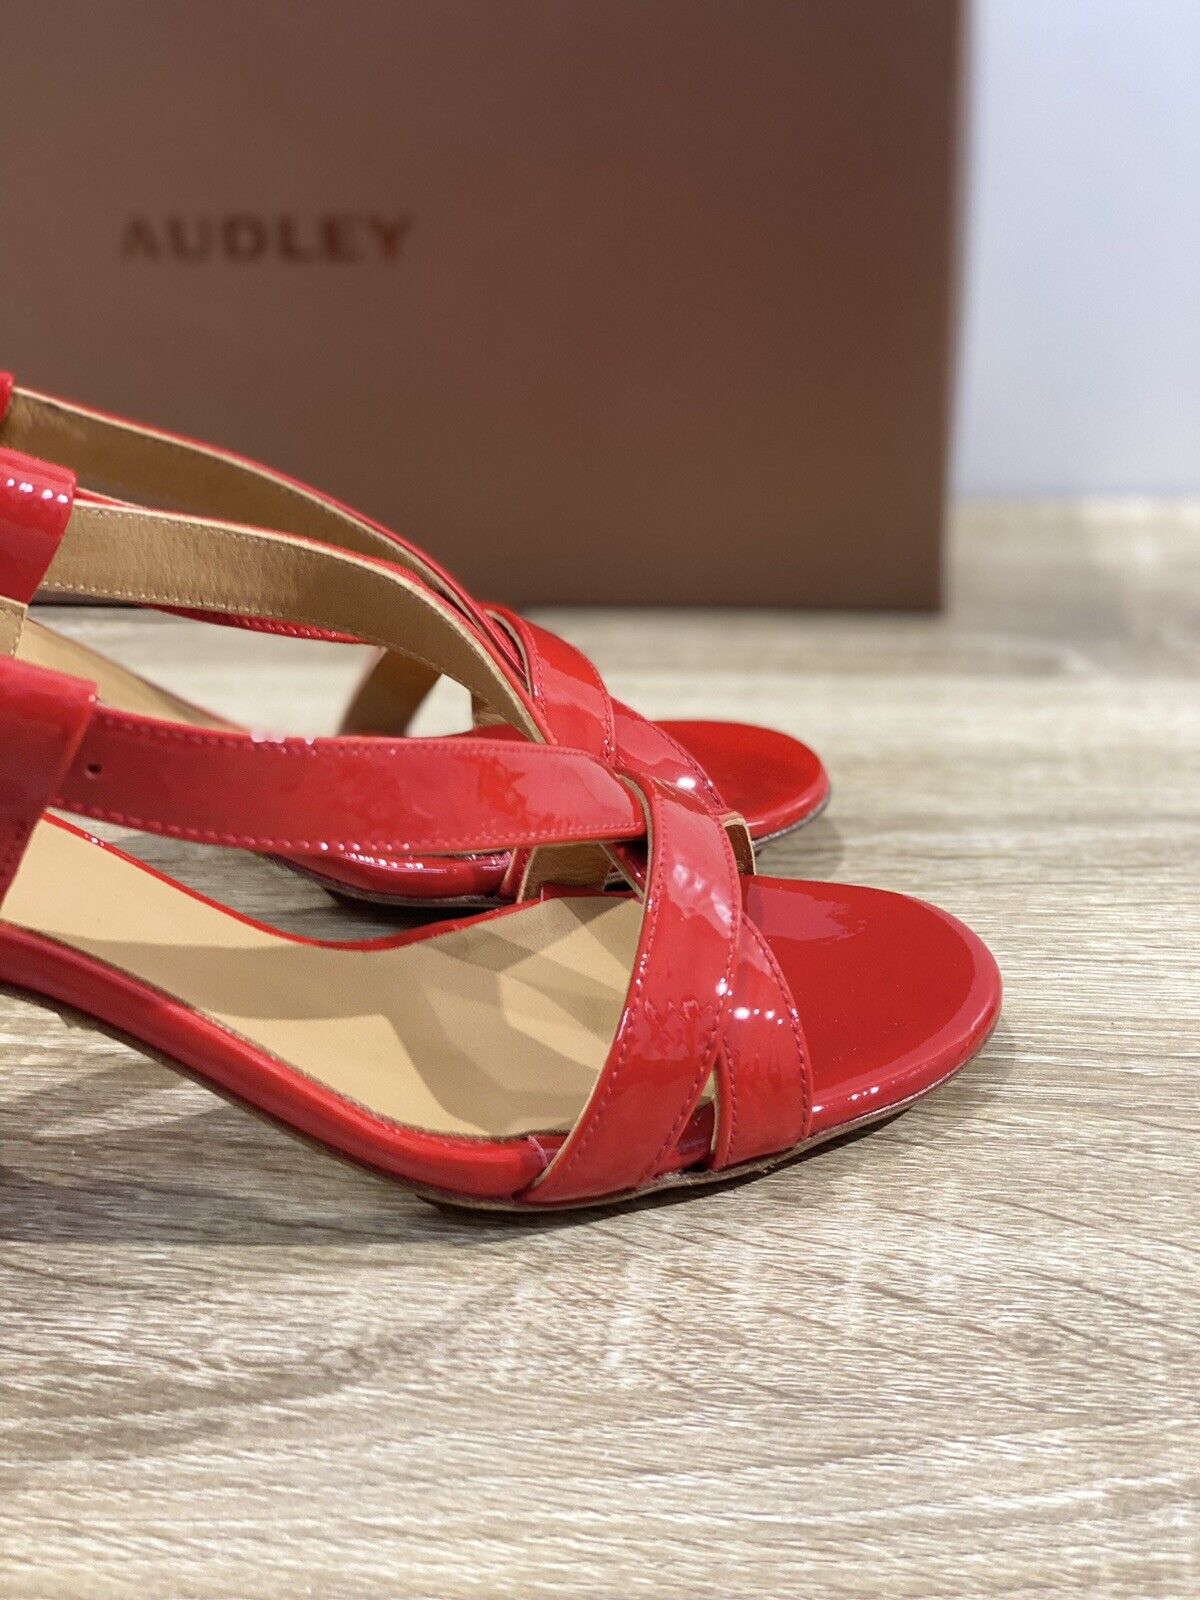 Audley London Sandalo Donna In Pelle Rossa Vernice Con Tacco 40